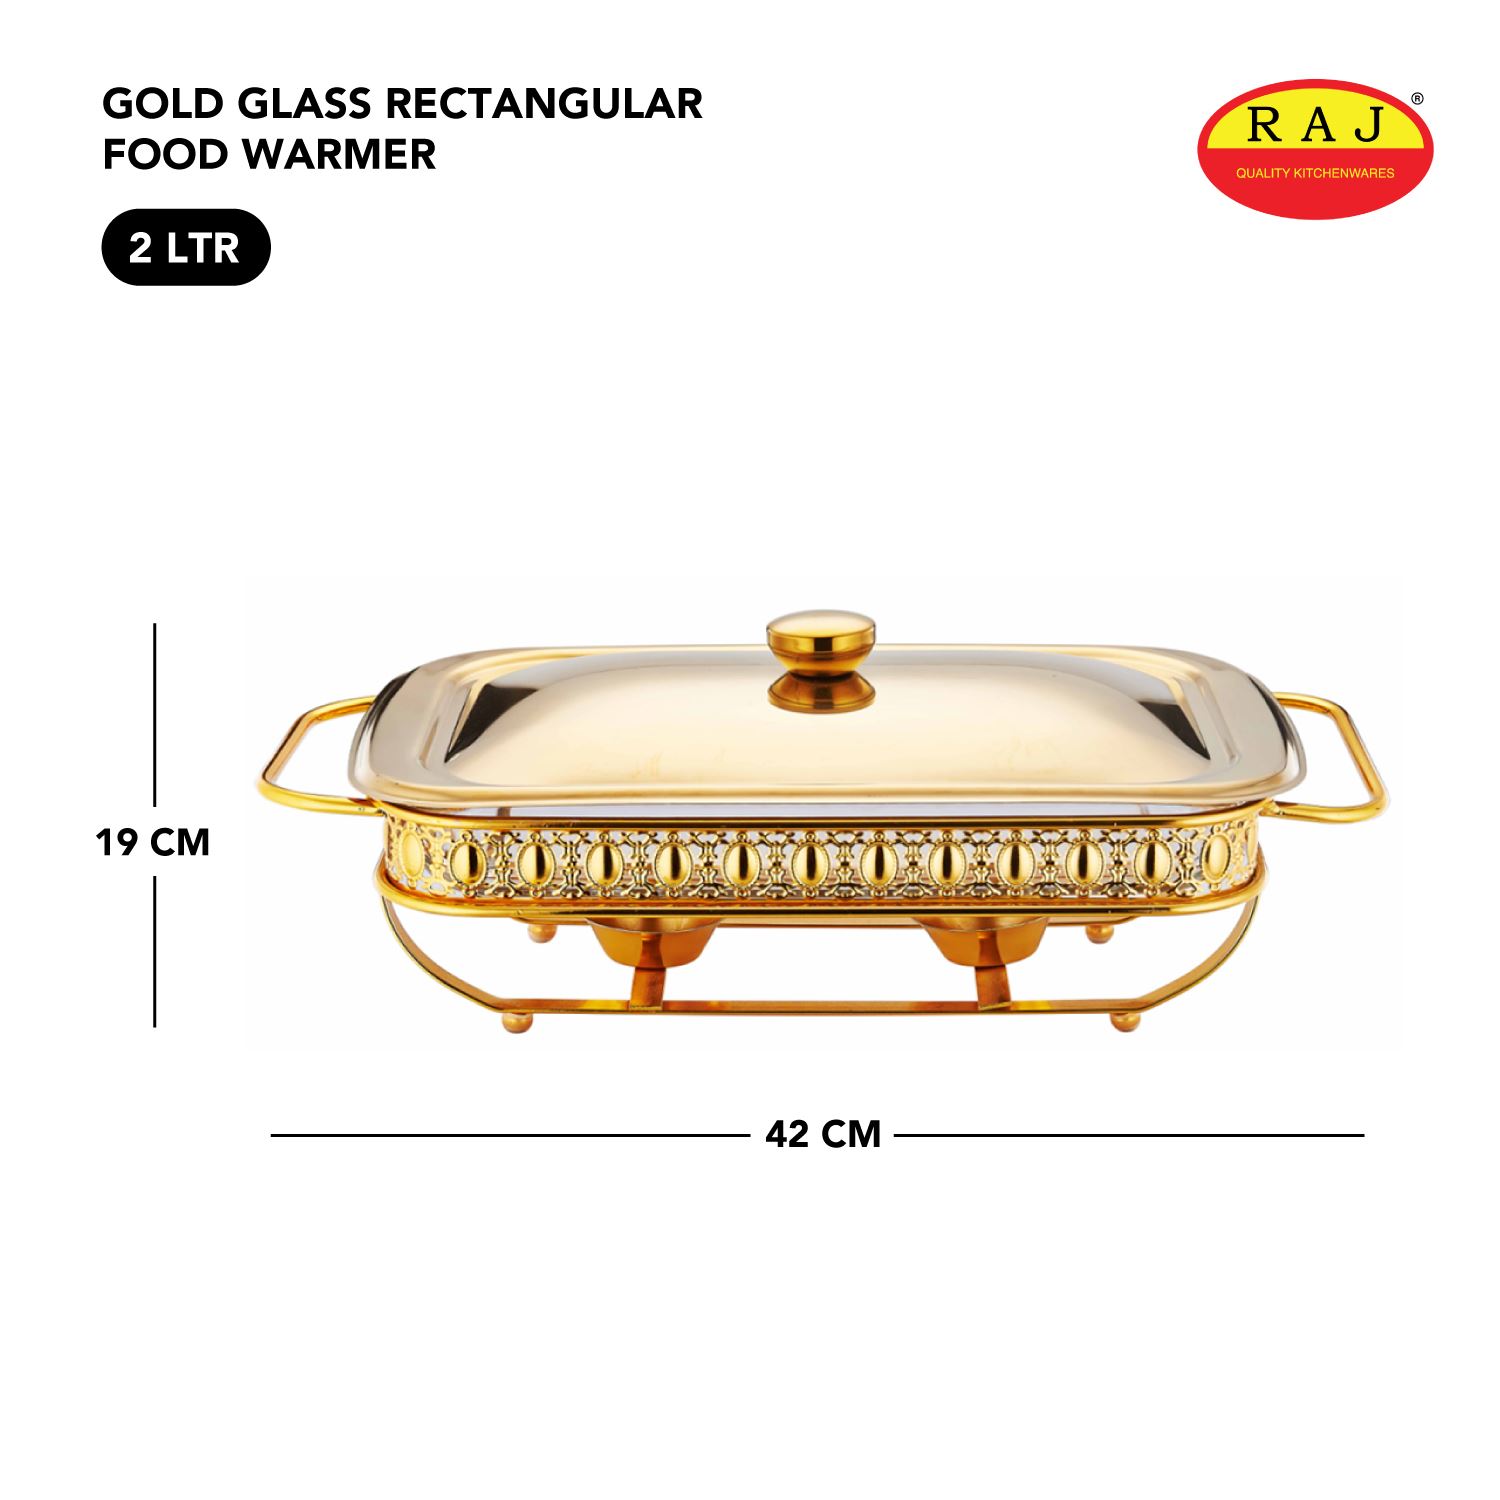 Raj Gold Glass Rectangular Food Warmer 2.0 LTR